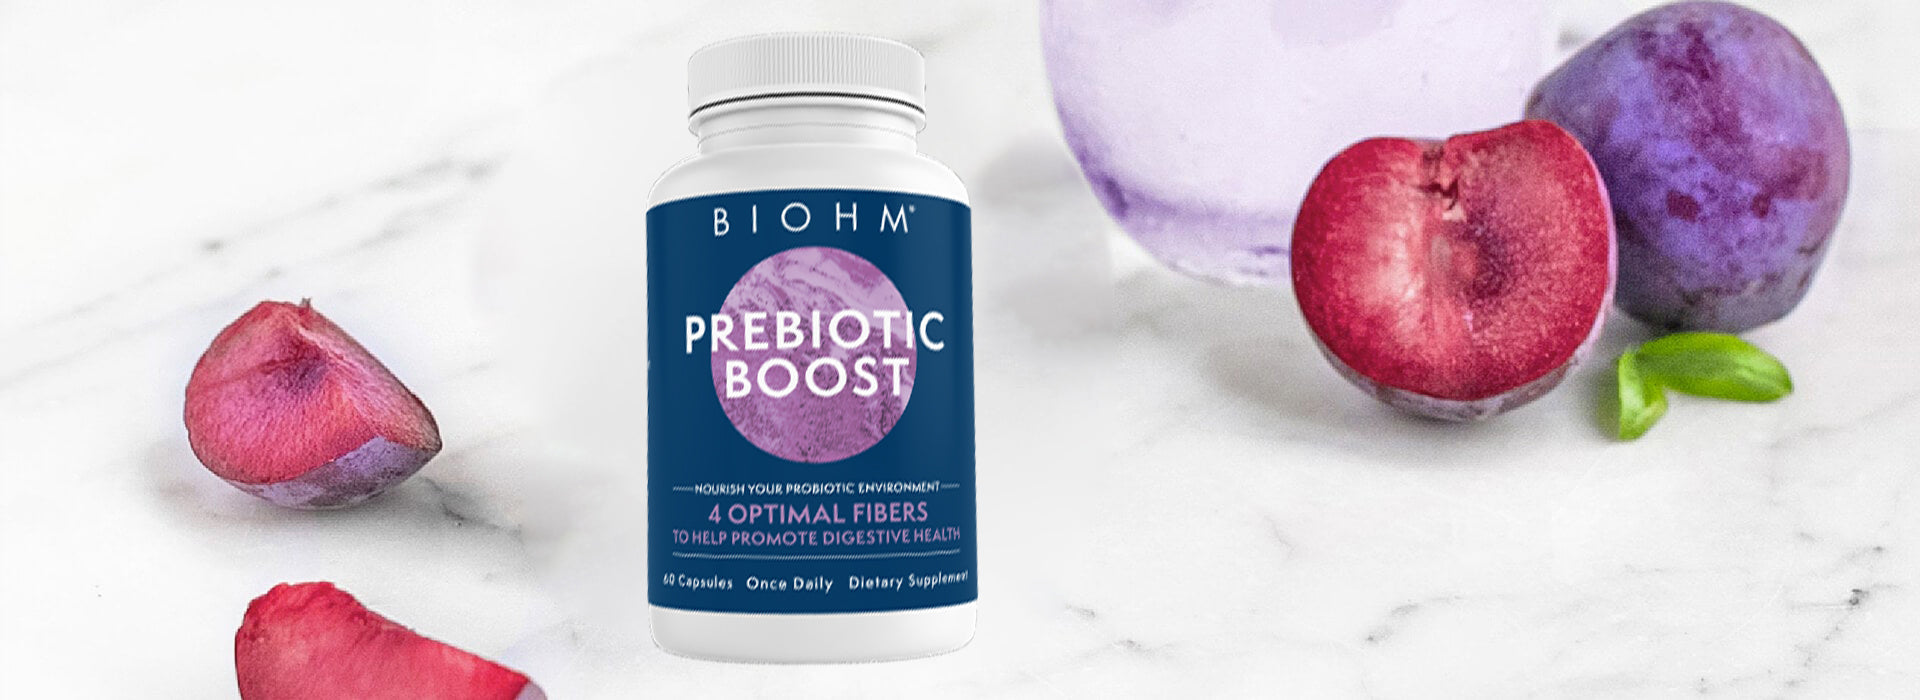 BIOHM Prebiotic Boost with plum